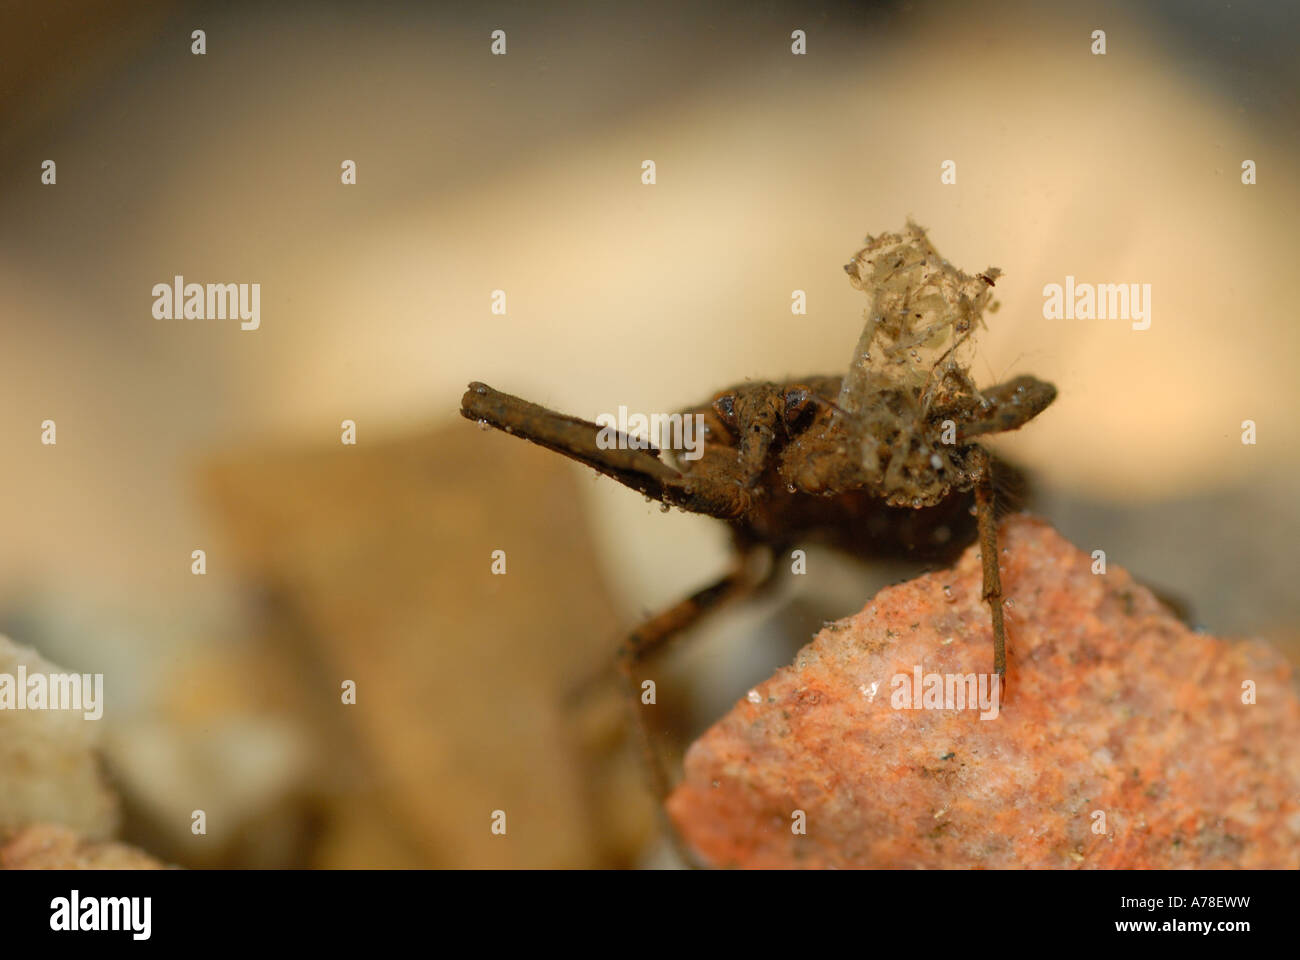 Water Scorpion (Nepa cinerea) Stock Photo